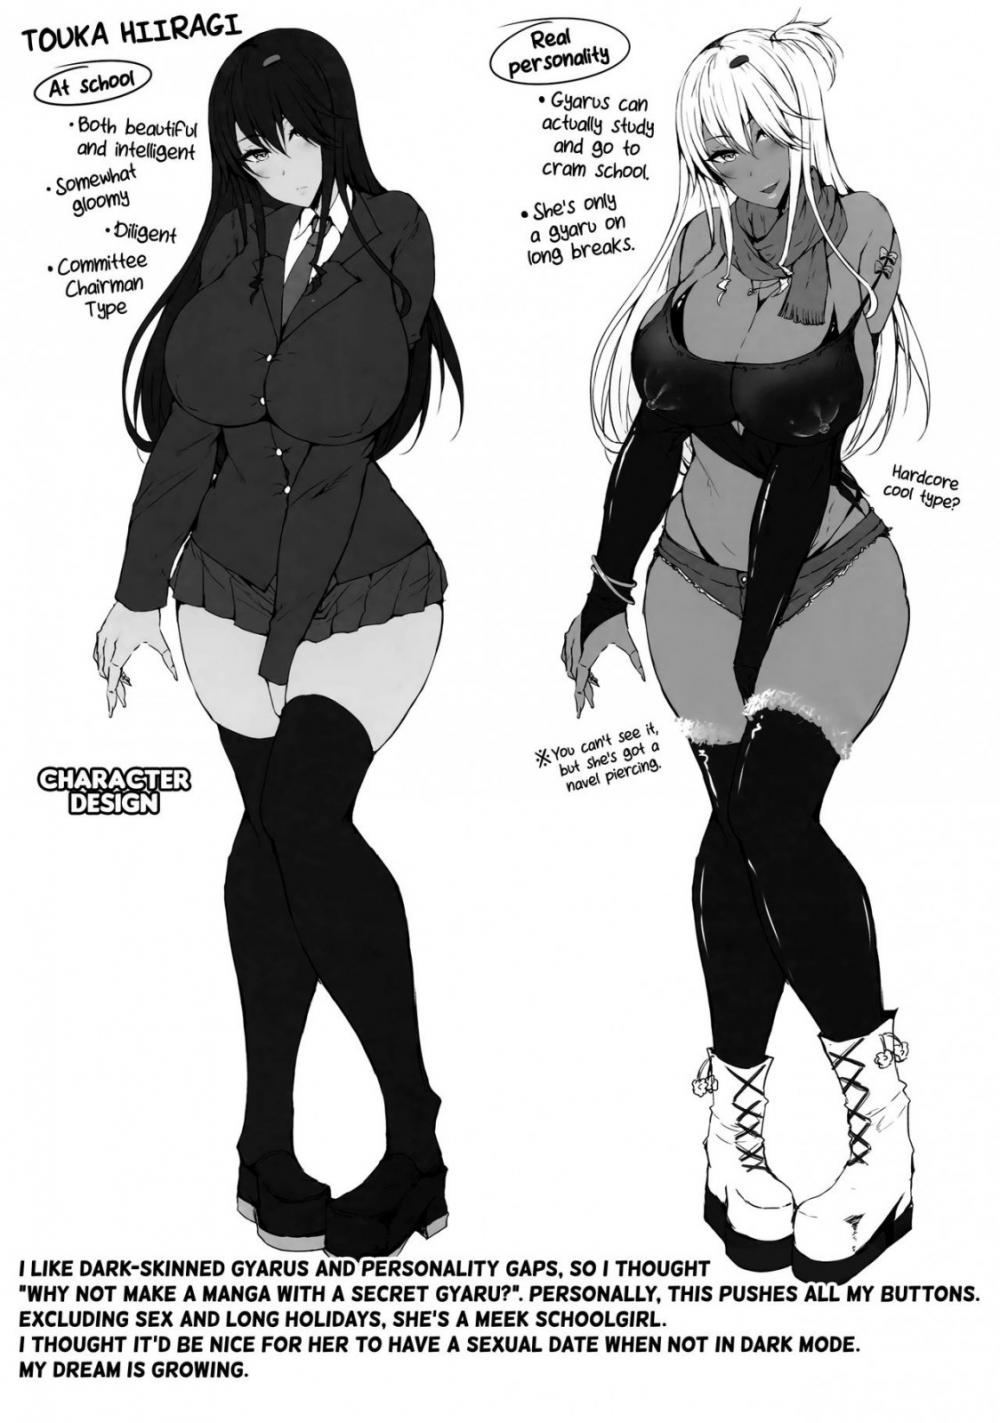 The Serious Class Committee Chairman is Secretly a Dark-skinned Gyaru-Read-Hentai Manga Hentai Comic image